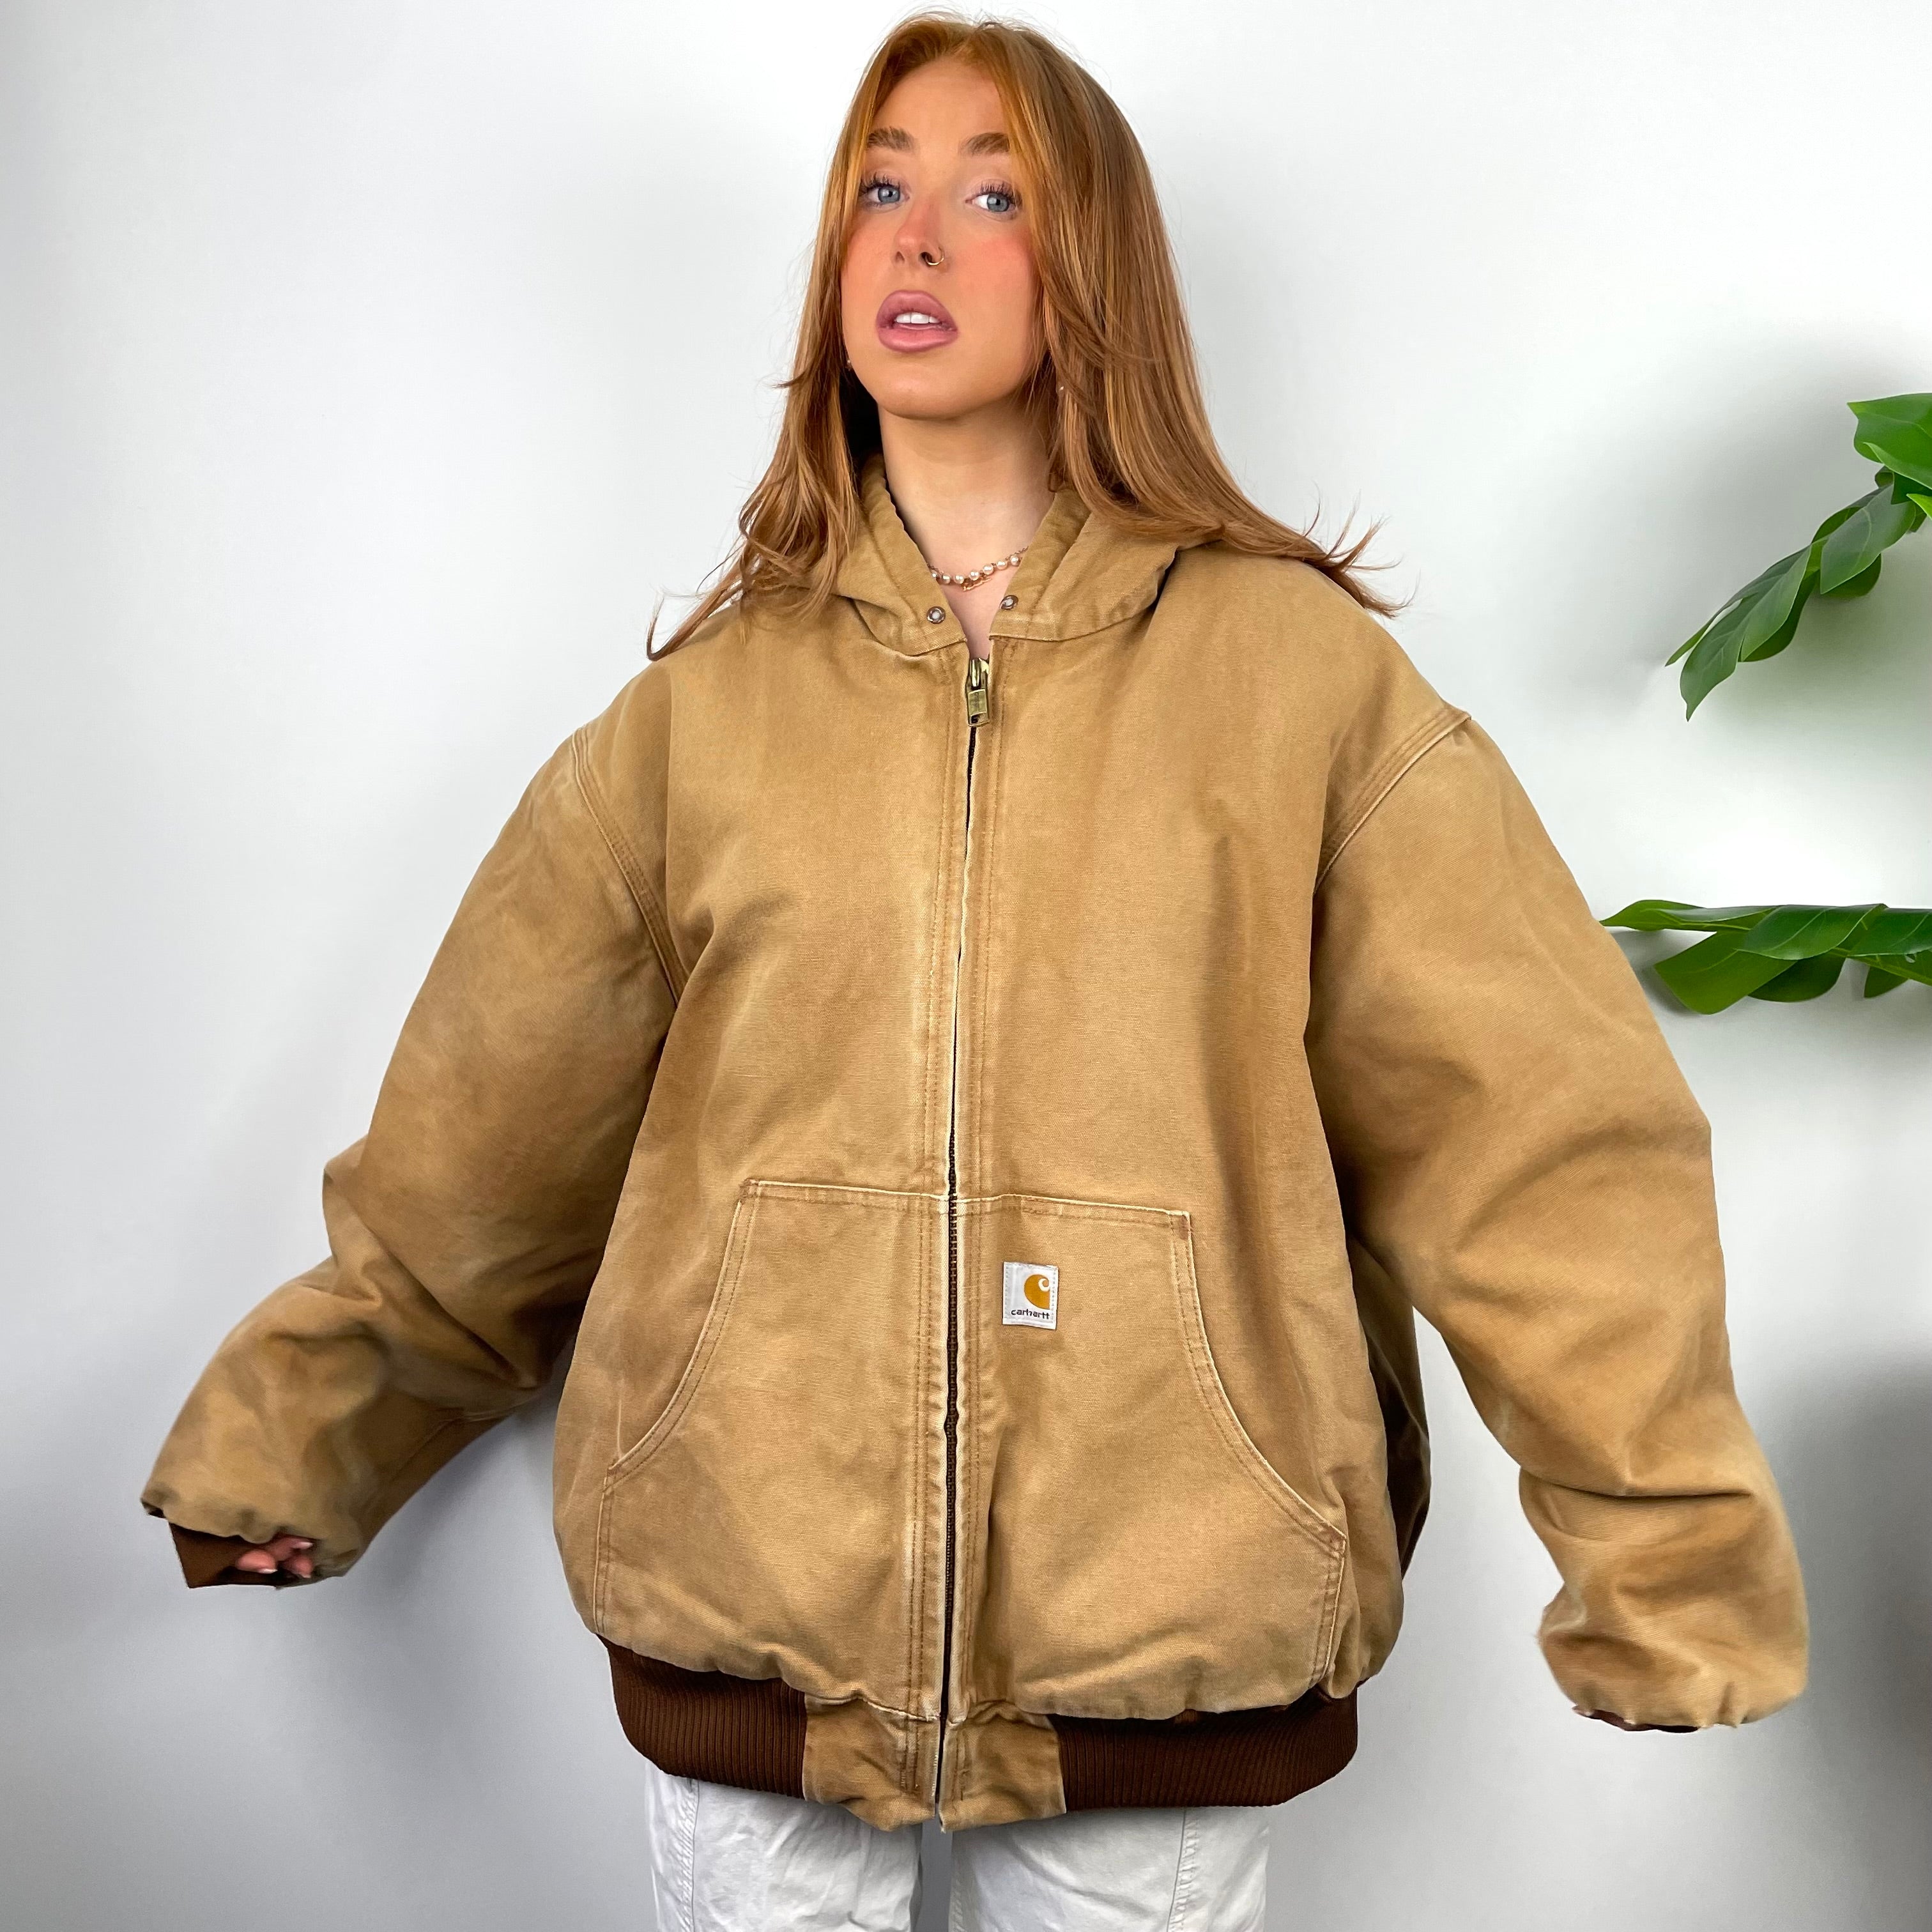 Carhartt RARE Tan Brown Spell Out Zip Up Workwear Jacket (XXL)